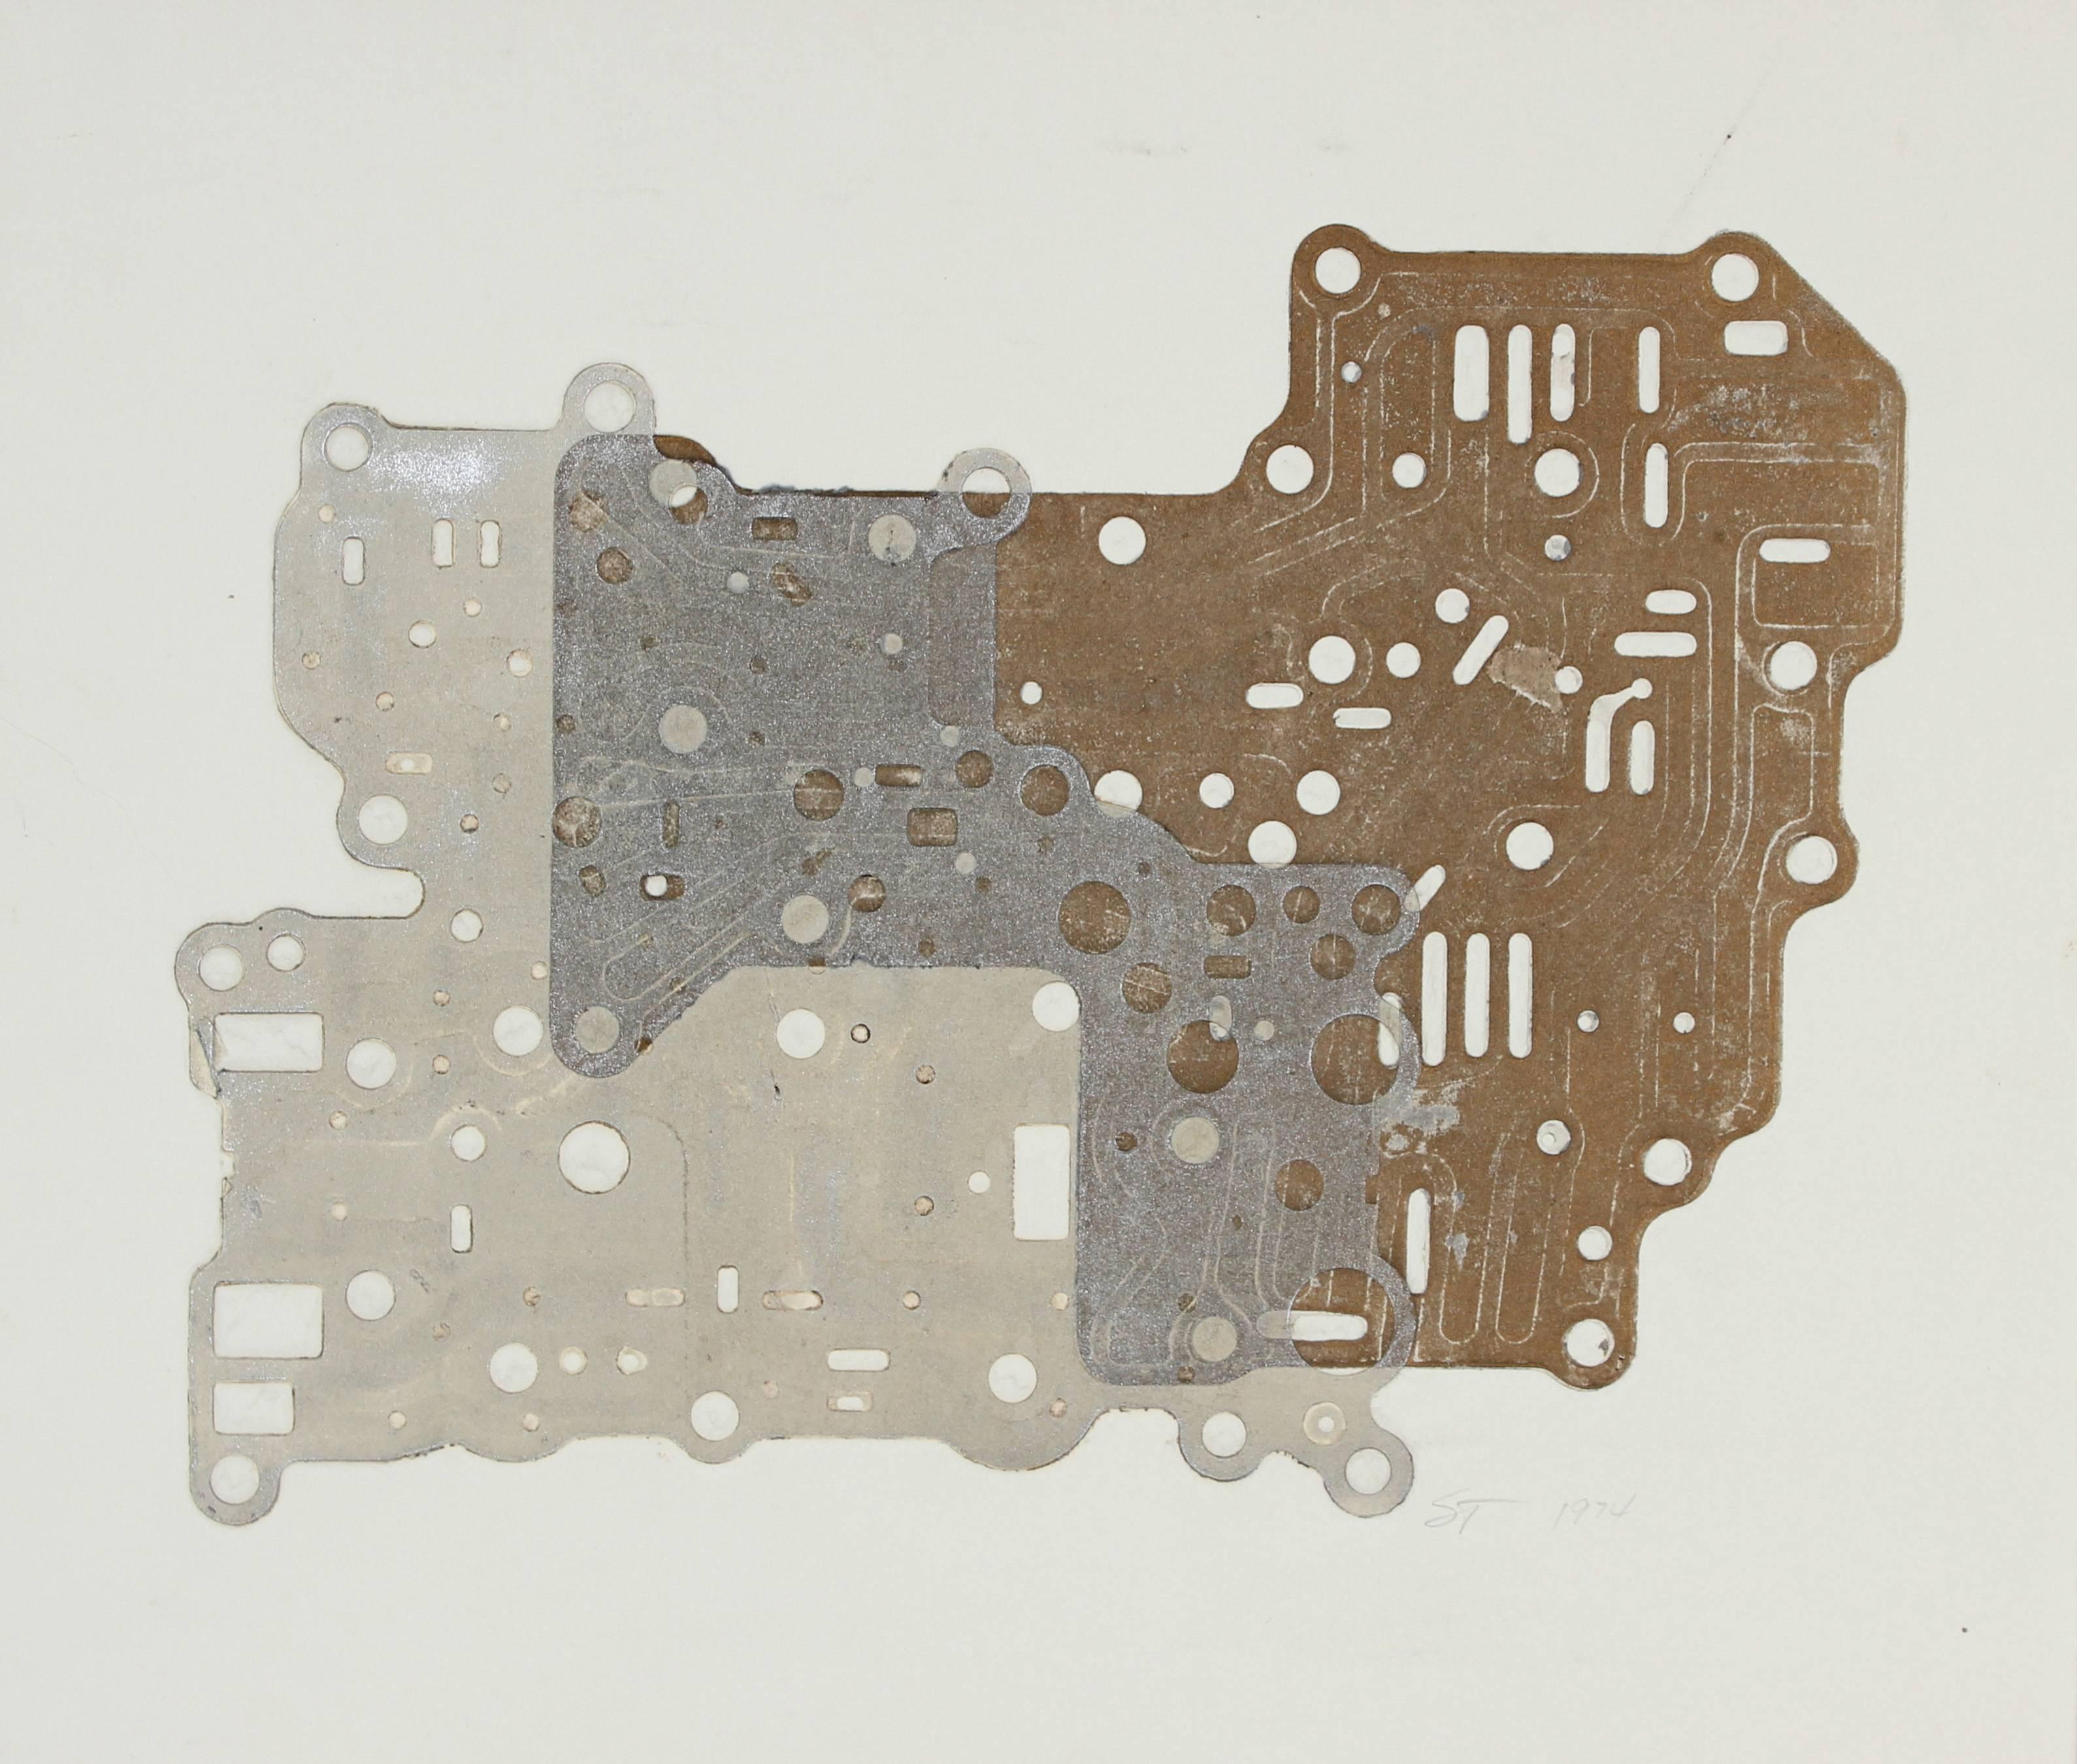 Seymour Tubis Abstract Print - Metallic Circuit Board Collograph Print, 1974